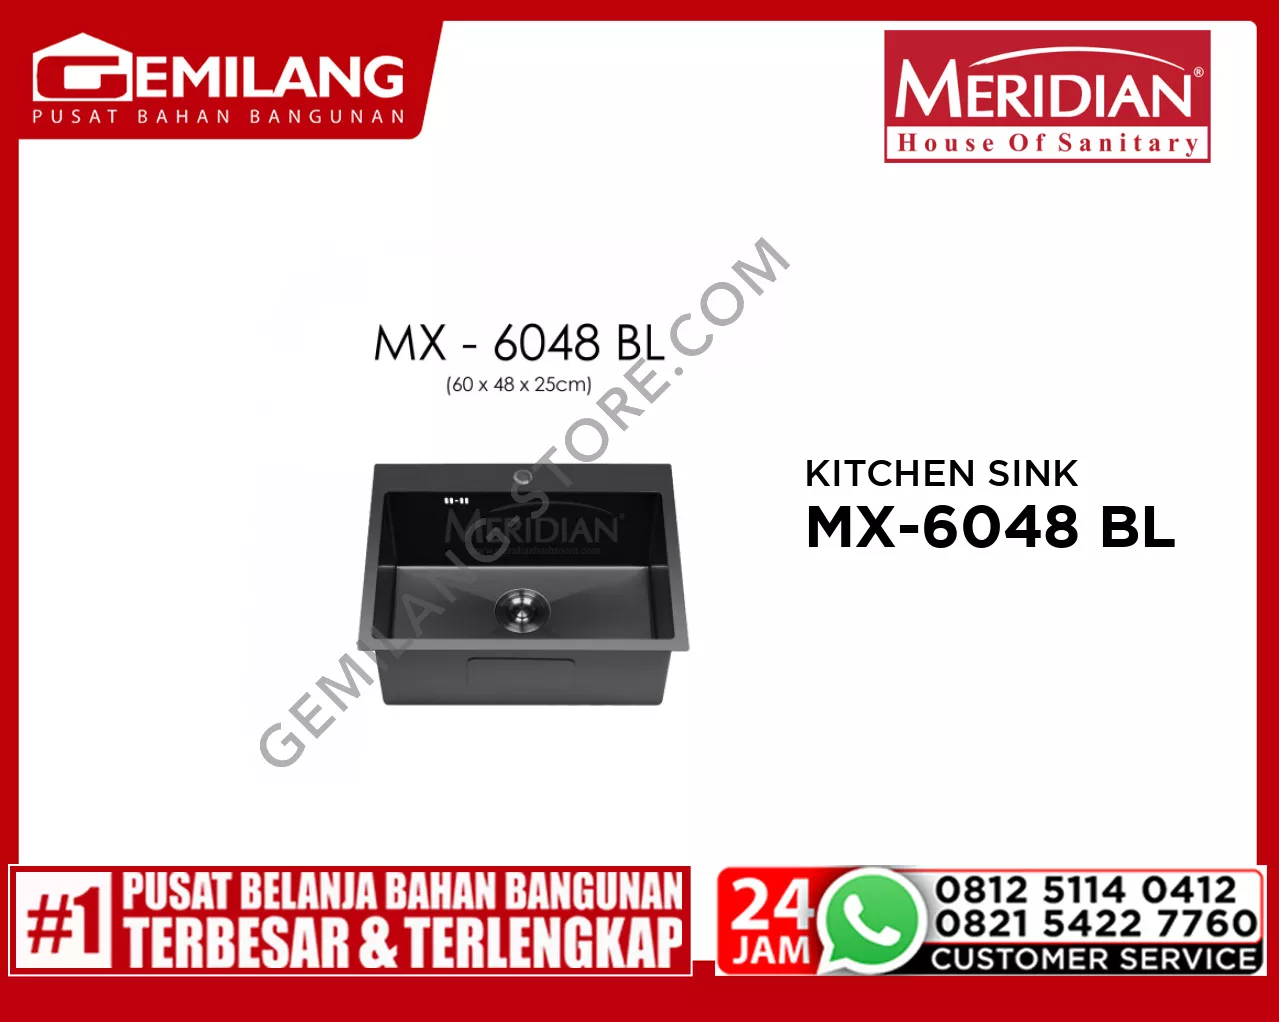 MERIDIAN KITCHEN SINK MX-6048 BLACK